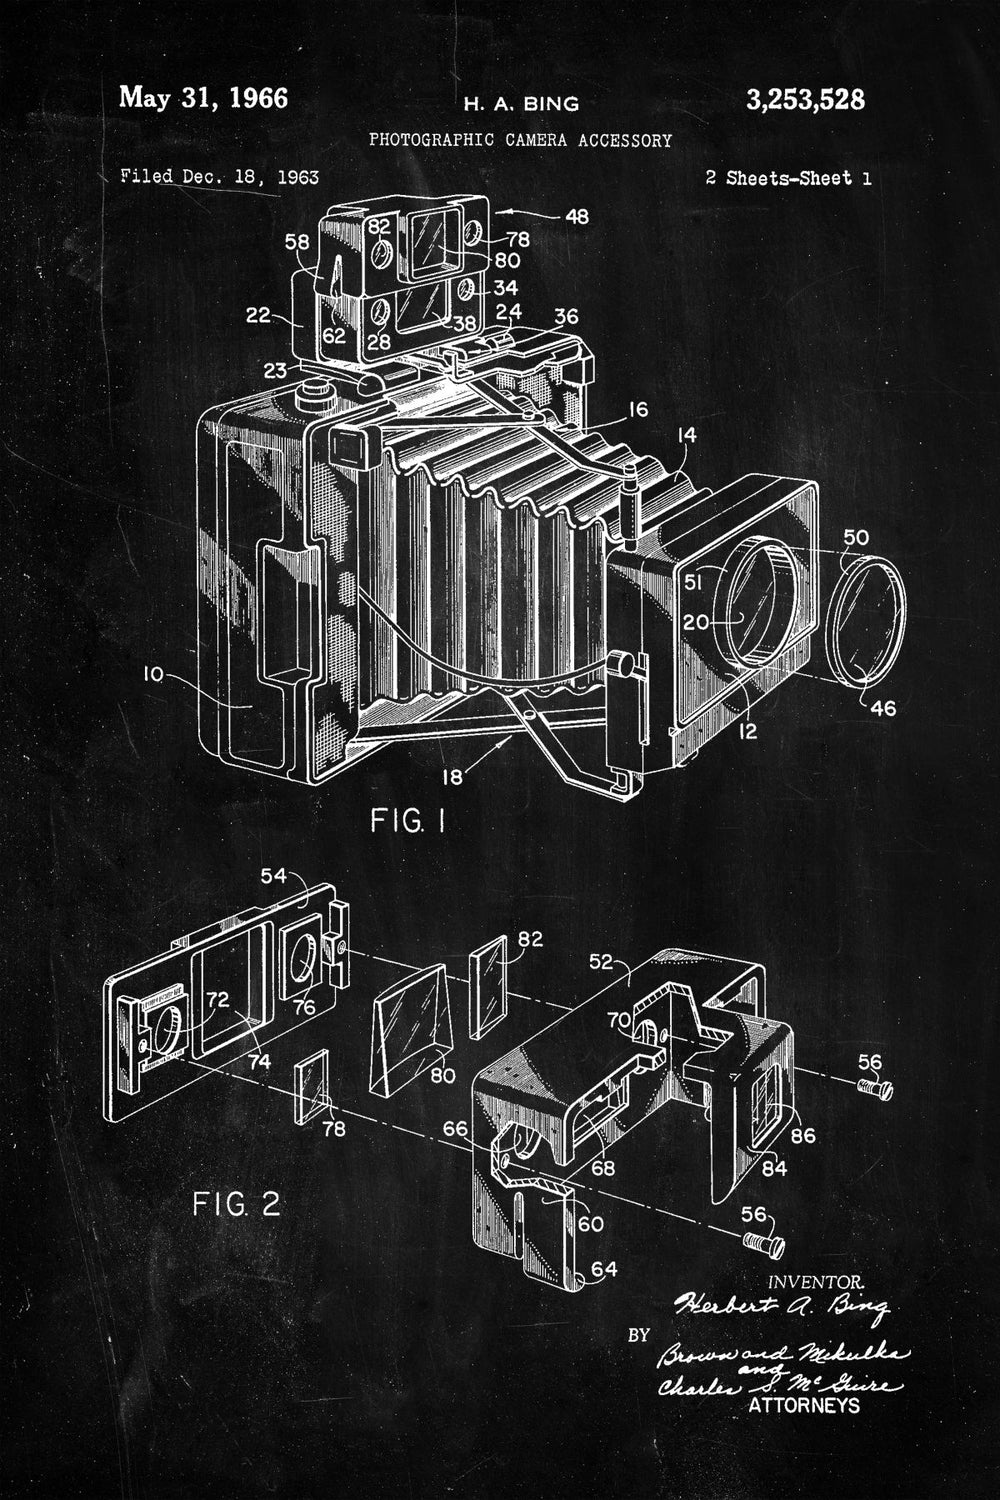 Photographic Camera Accessory BW Patent